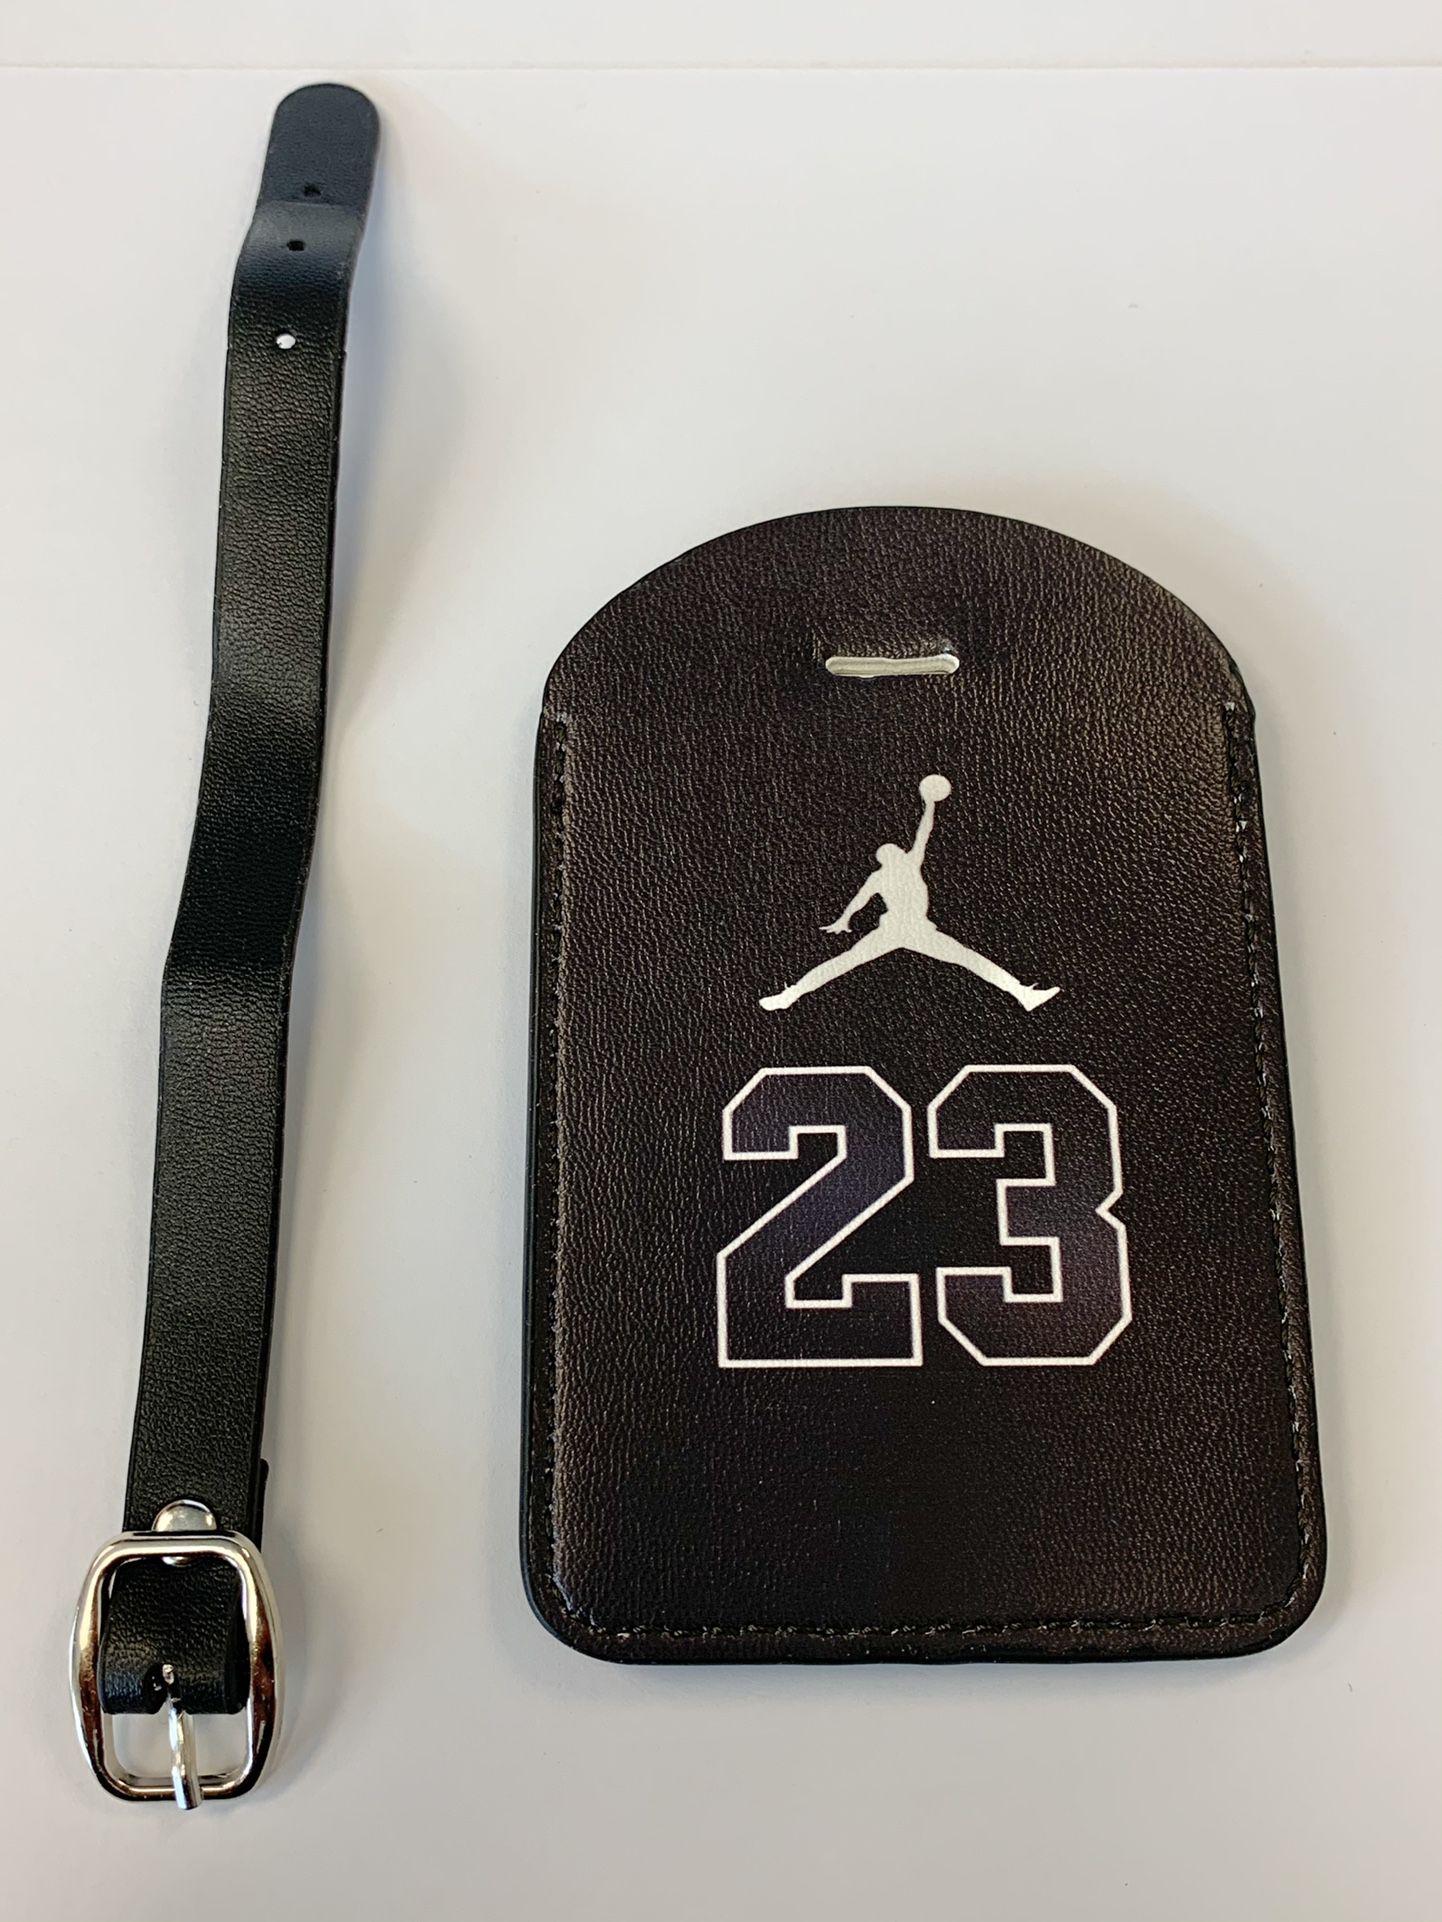 23 Jordan Luggage Tag. Faux Leather. New!